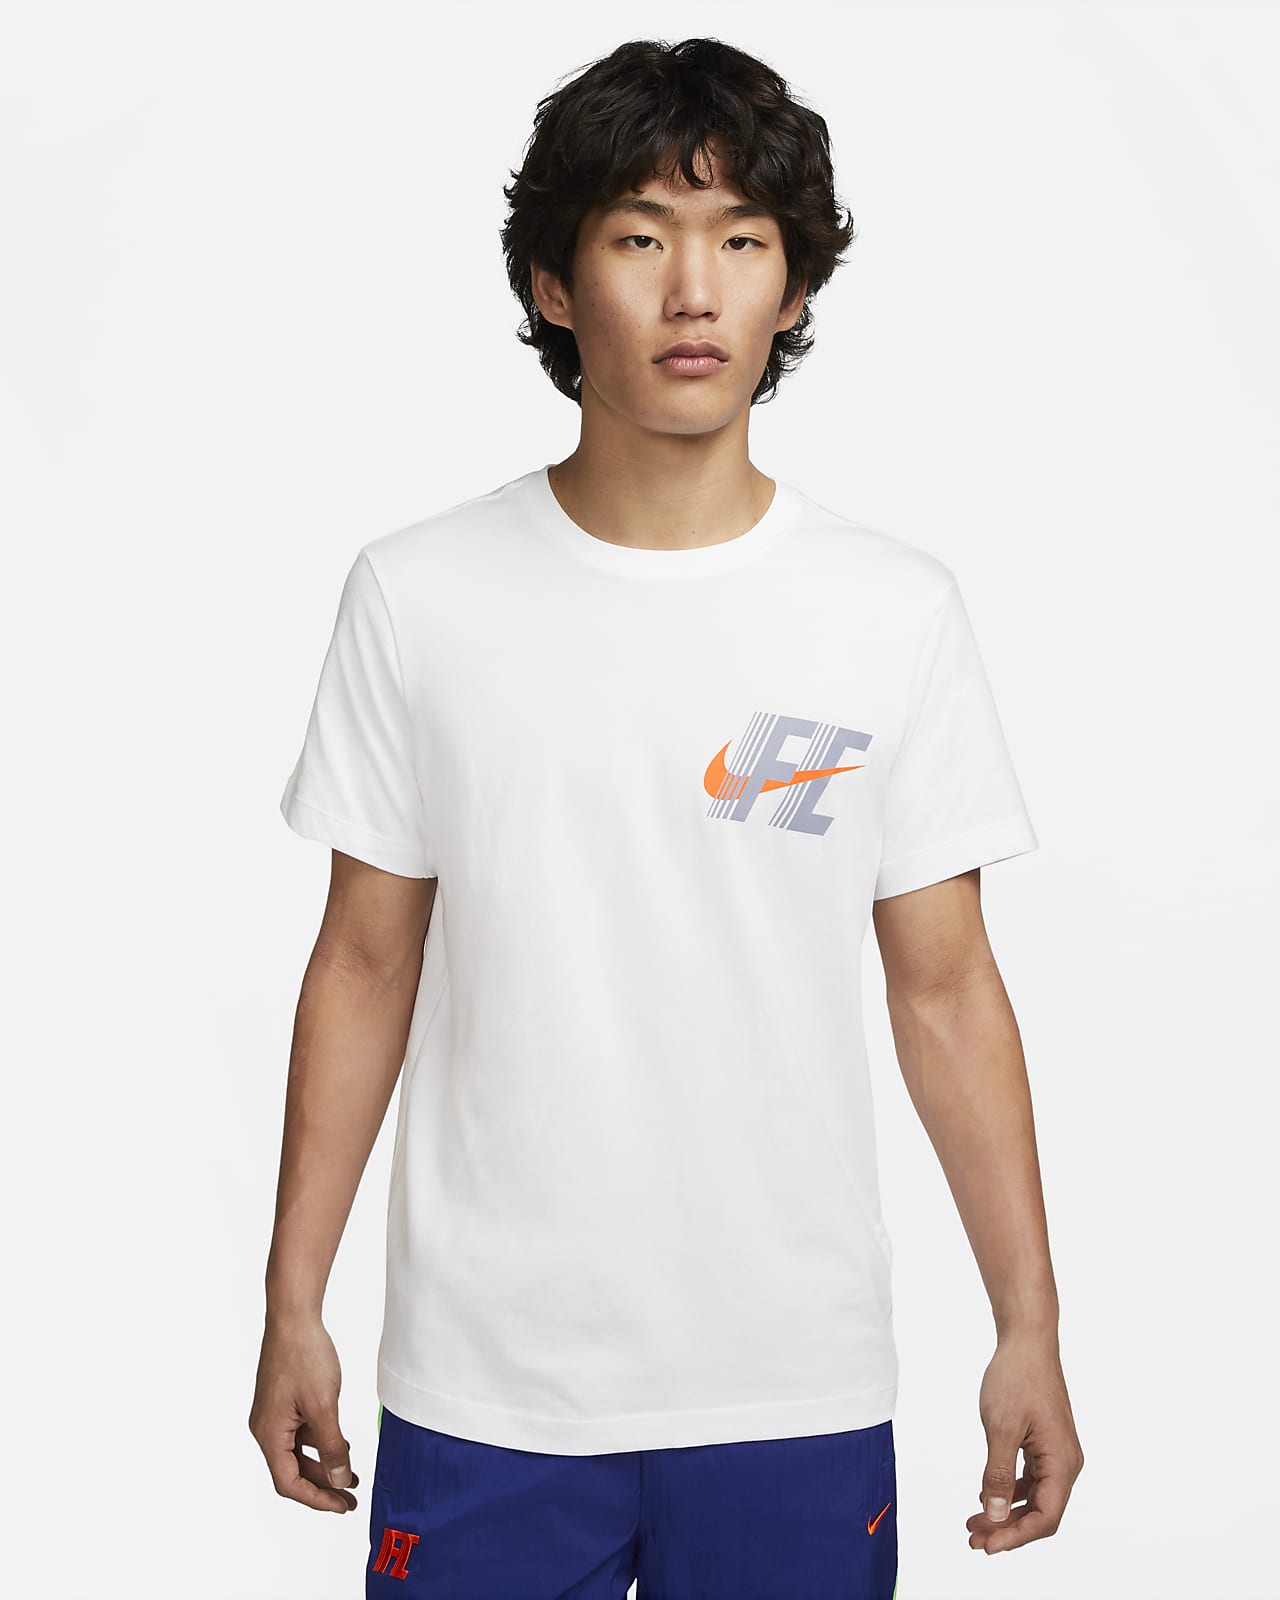 Nike F.C. Men's Nike Dri-FIT Football T-Shirt